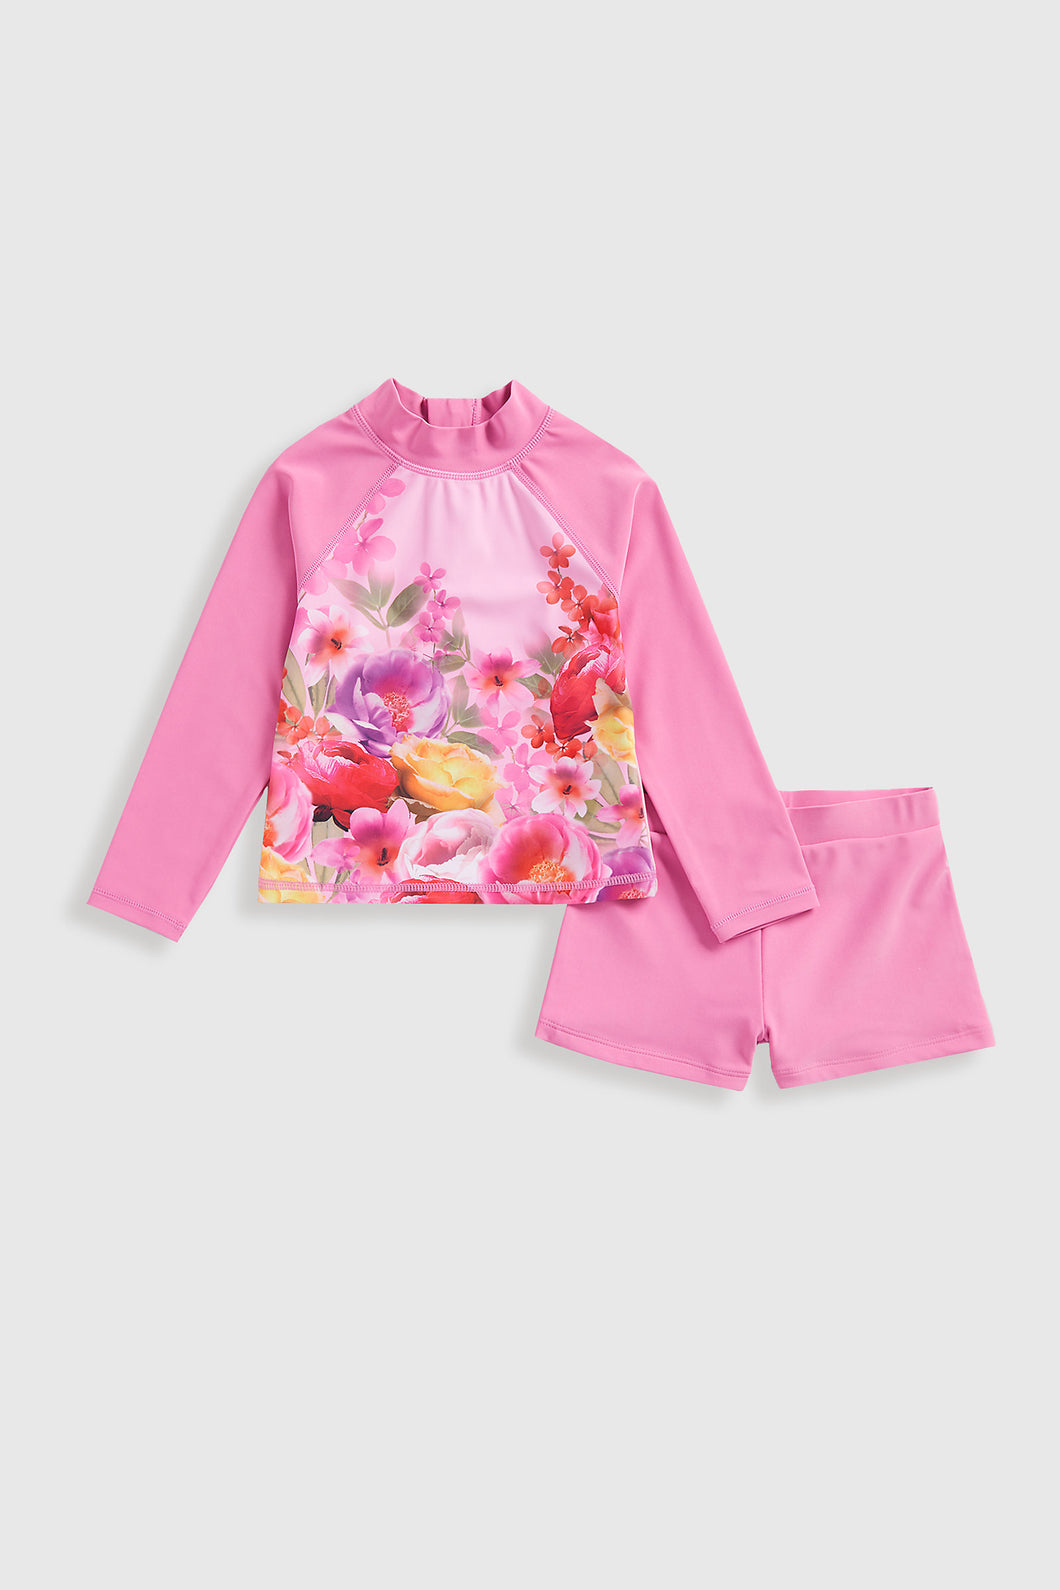 Mothercare Floral Sunsafe Rash Vest And Shorts Set Upf50+